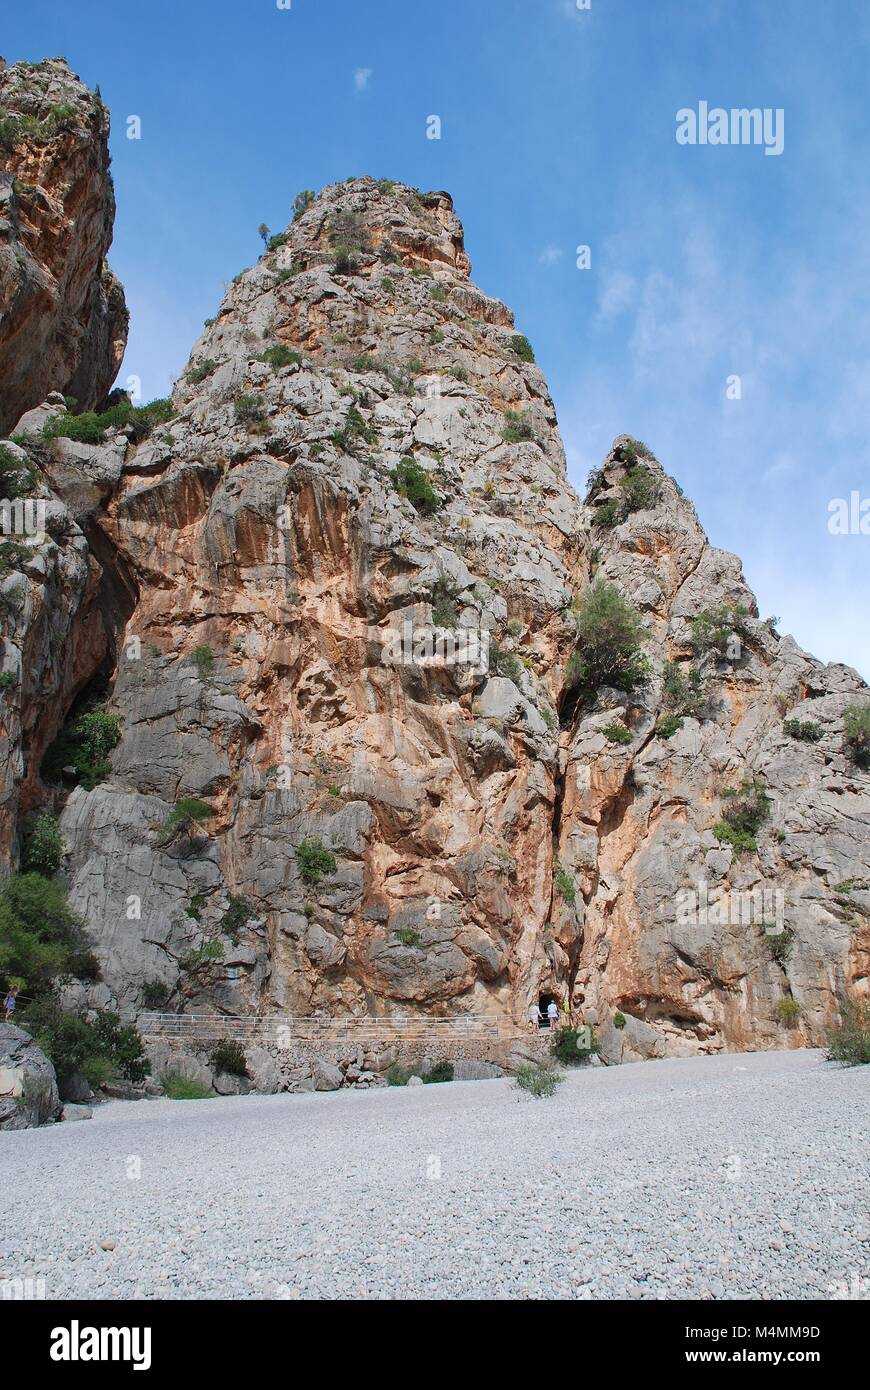 The Torrent de Pareis river gorge at Sa Calobra on the Spanish island of Majorca. Stock Photo